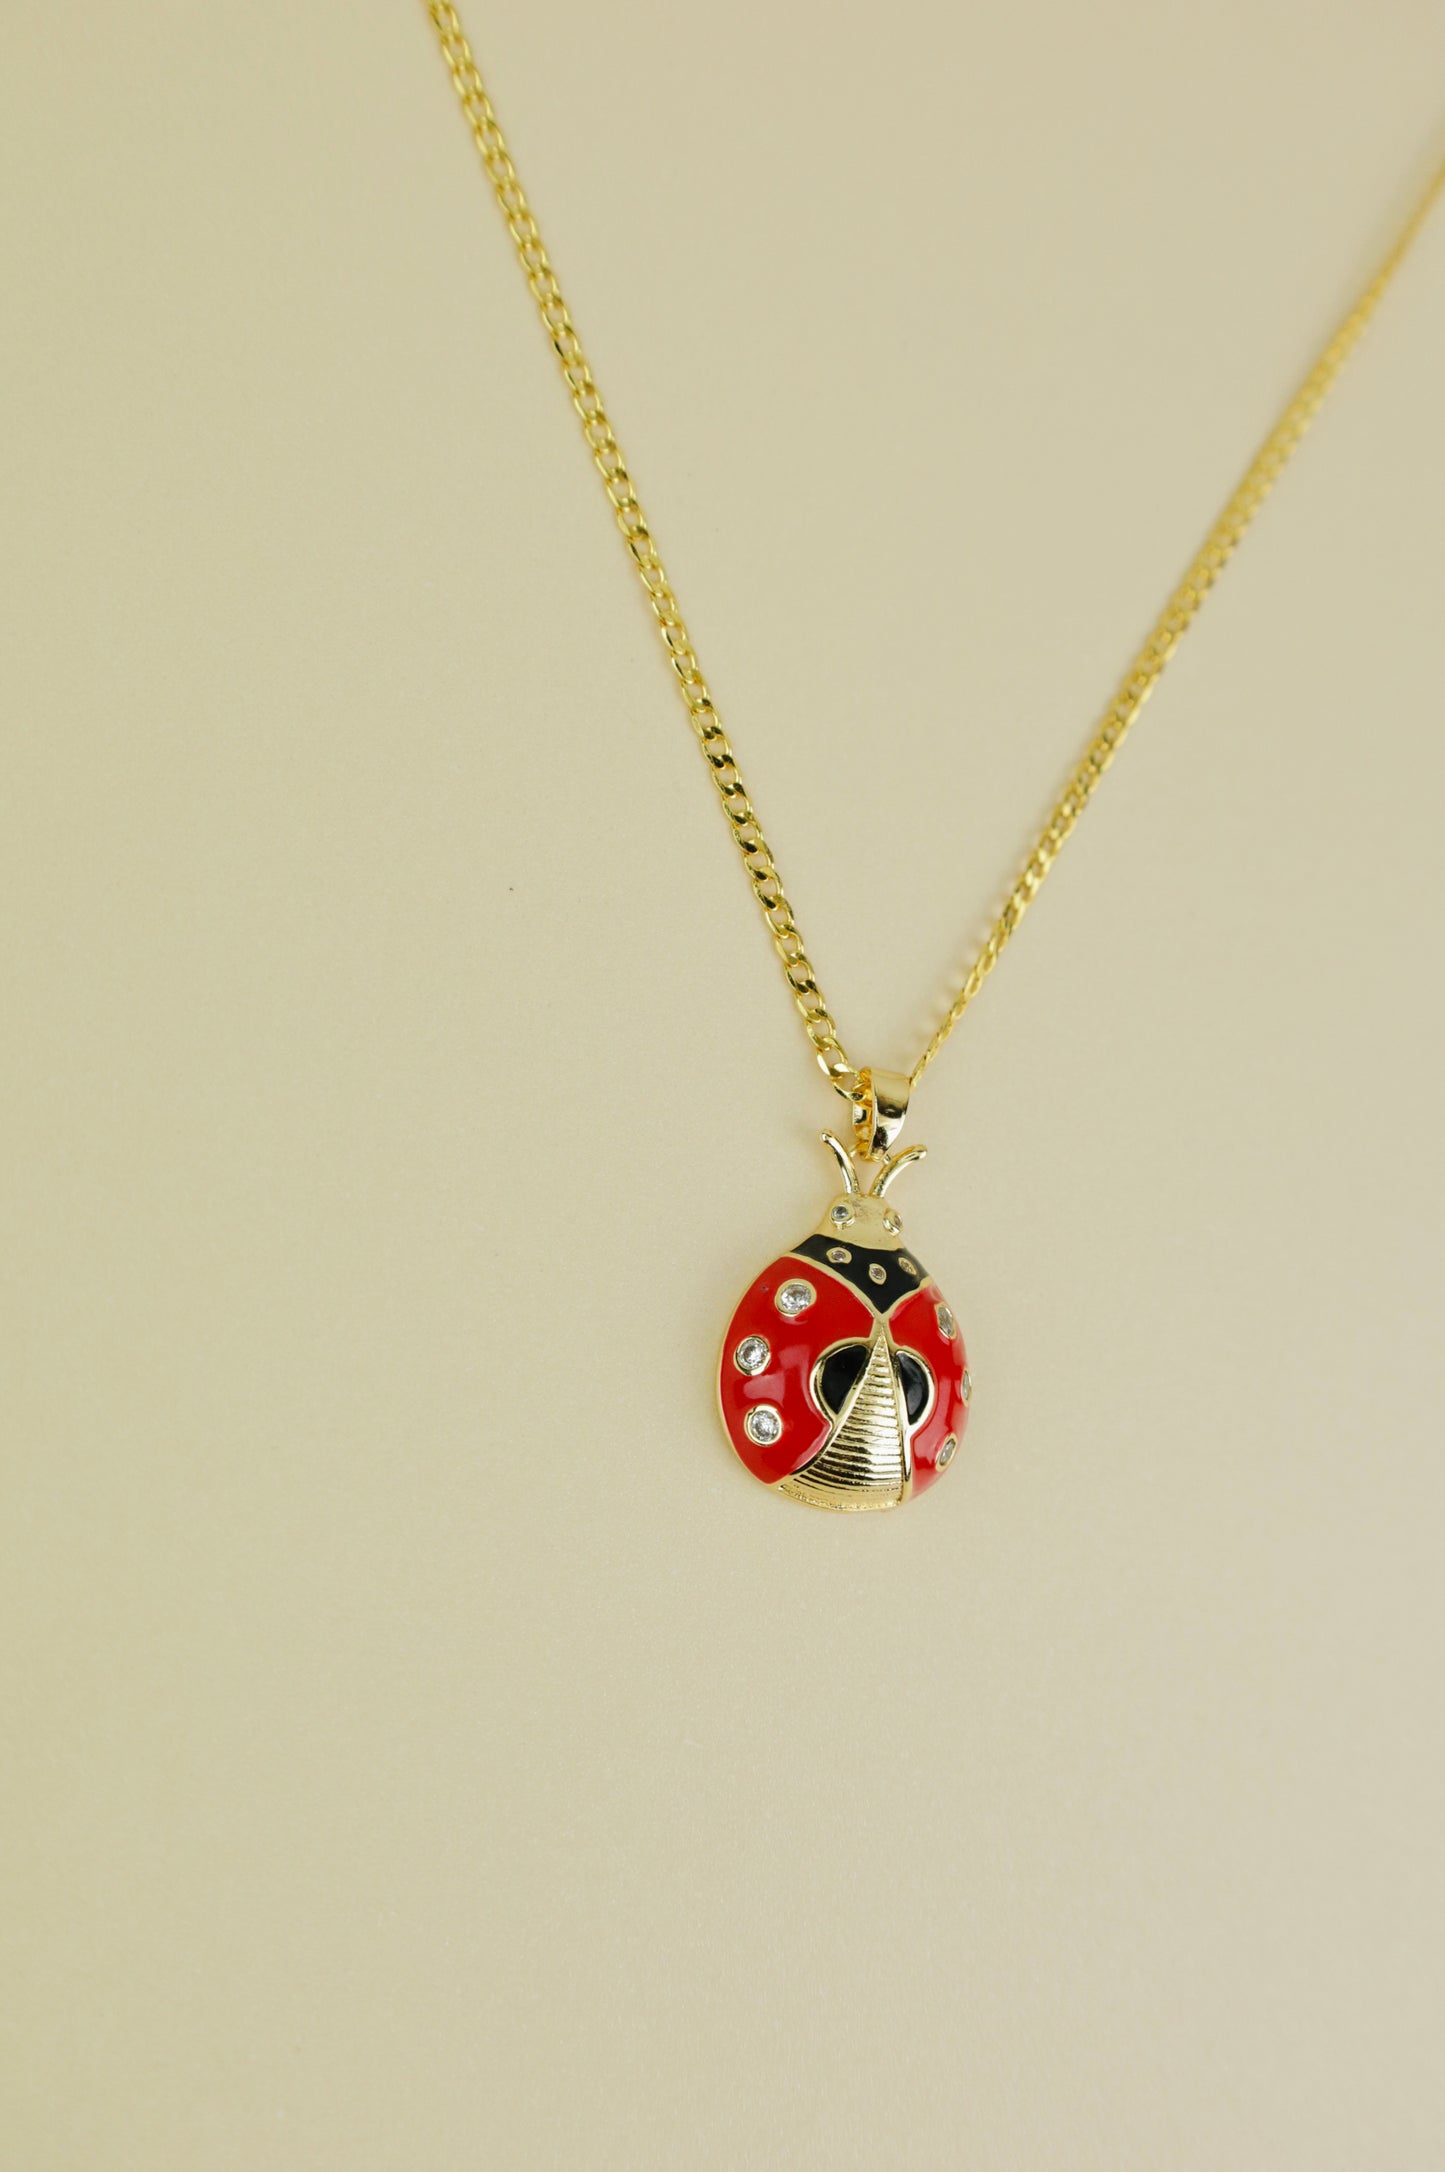 Ladybug Necklace in gold